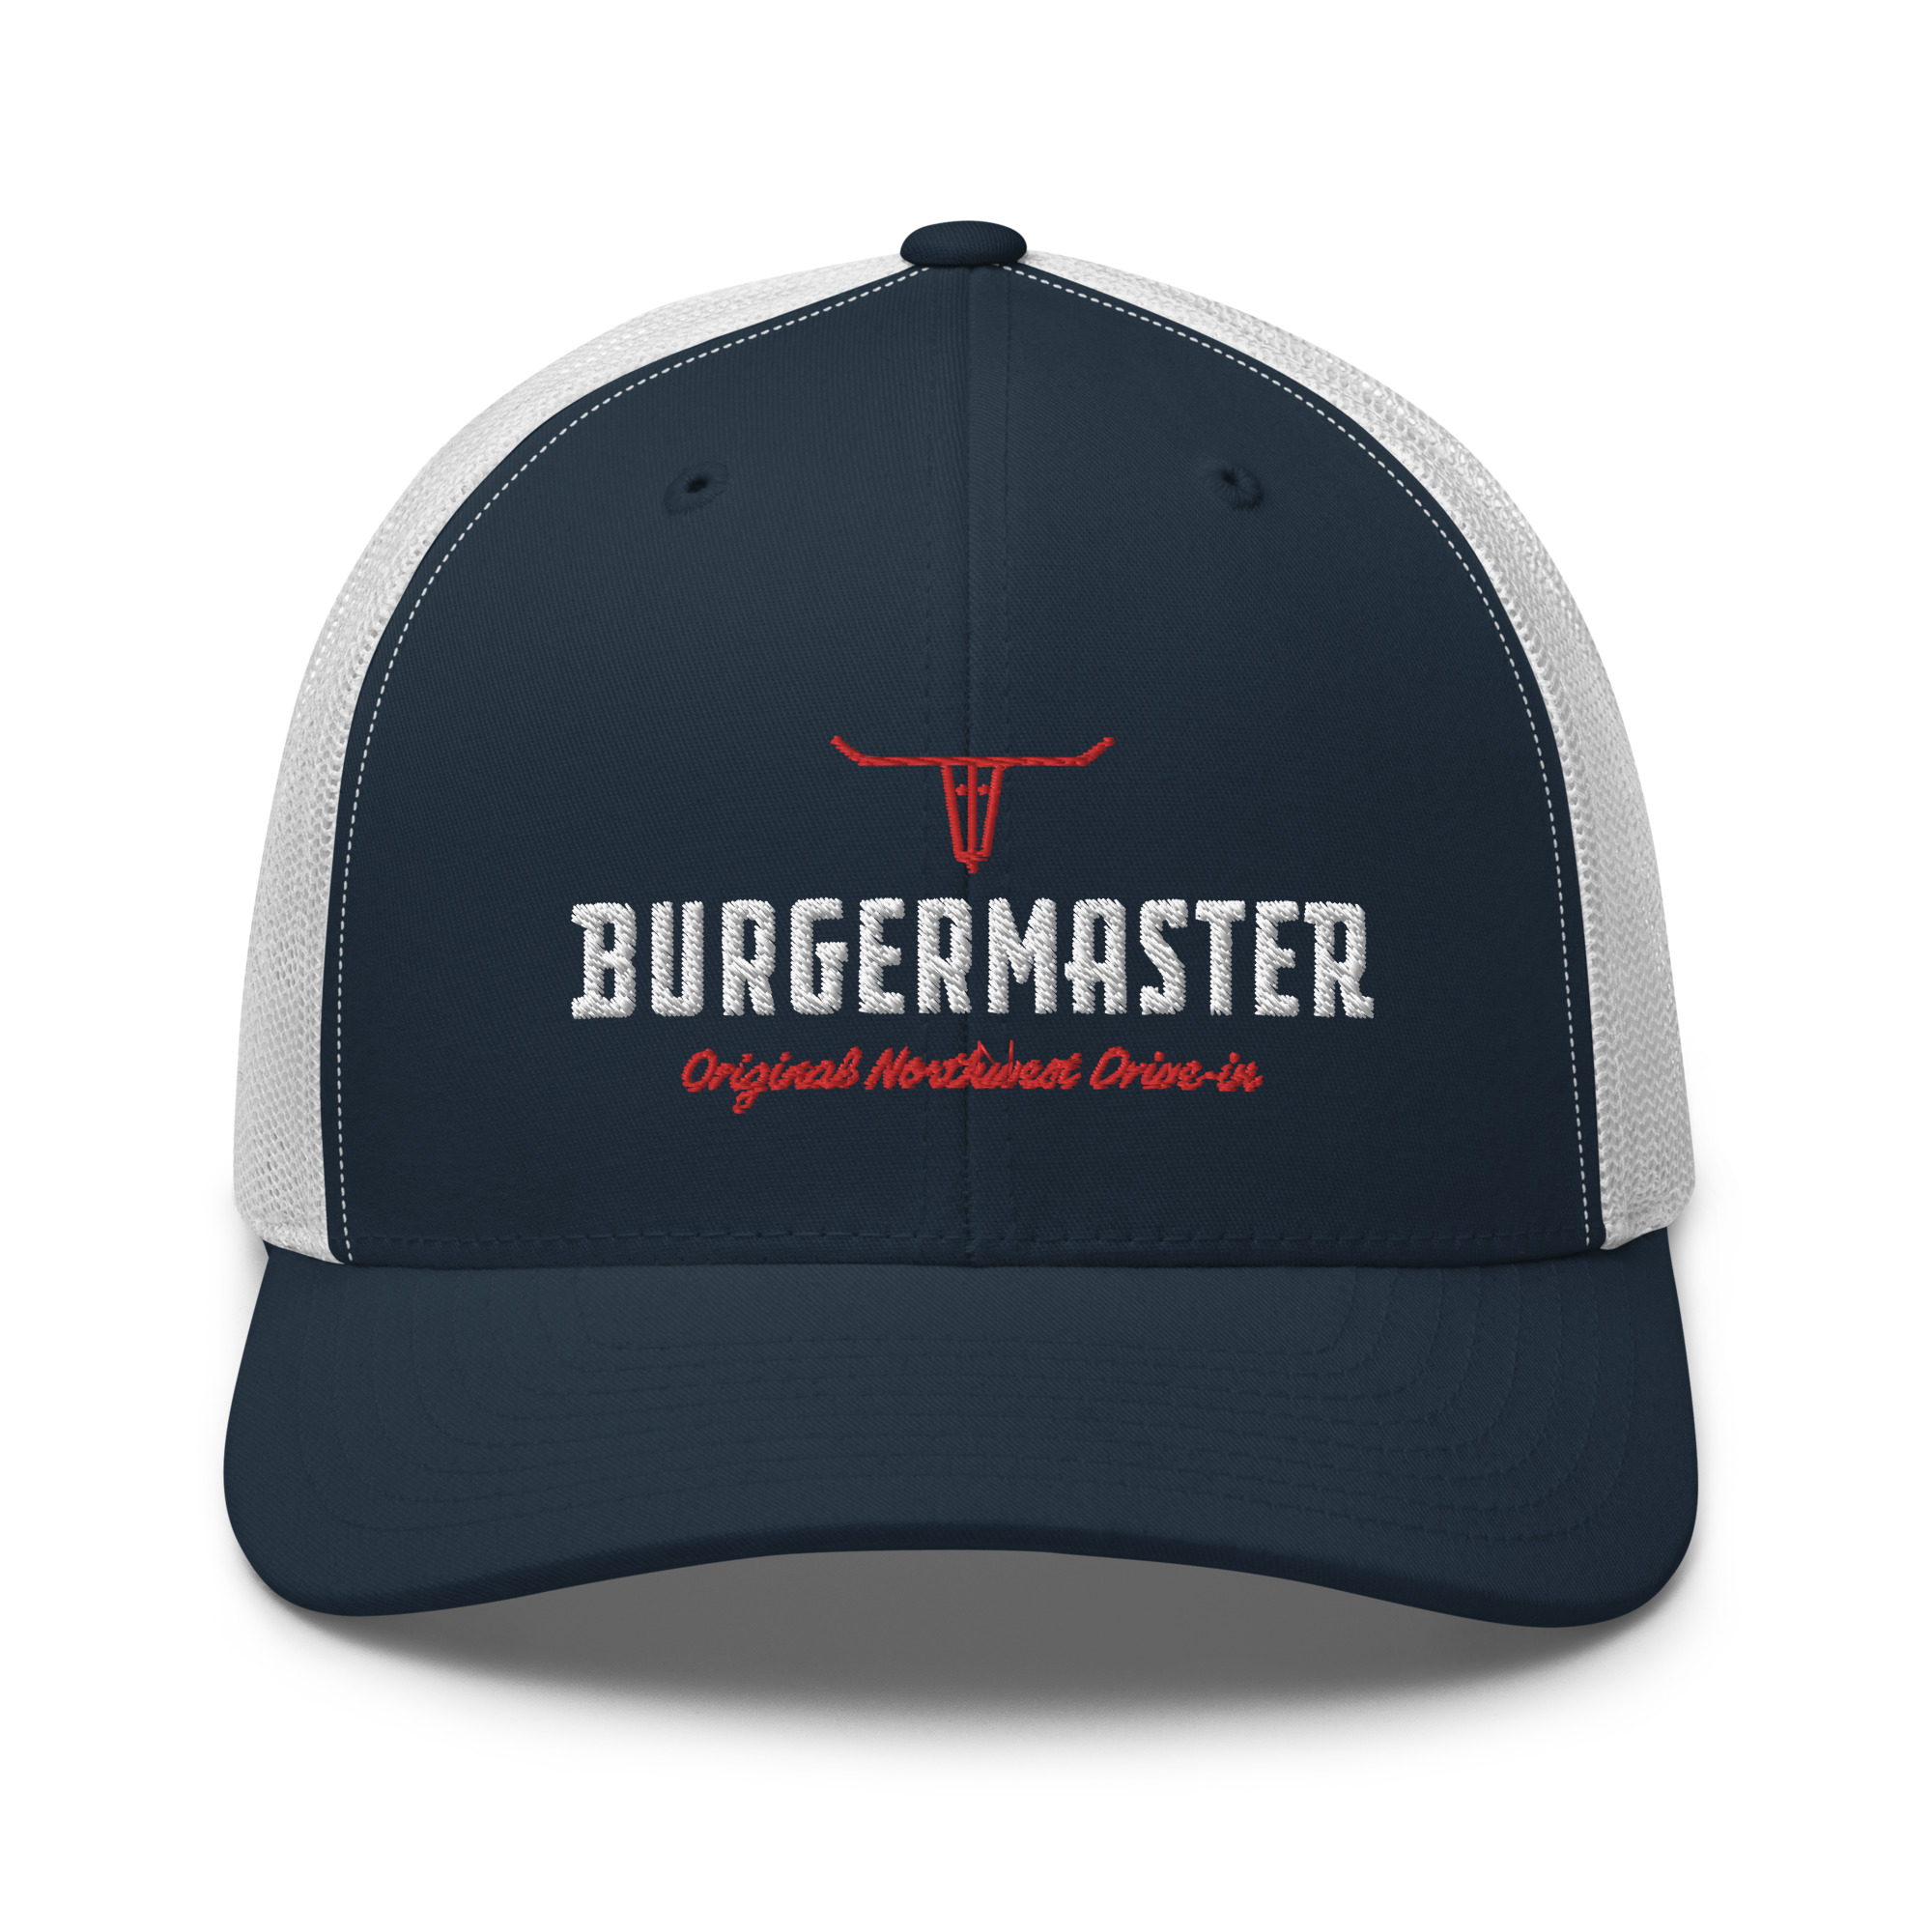 Burgermaster Trucker Hat